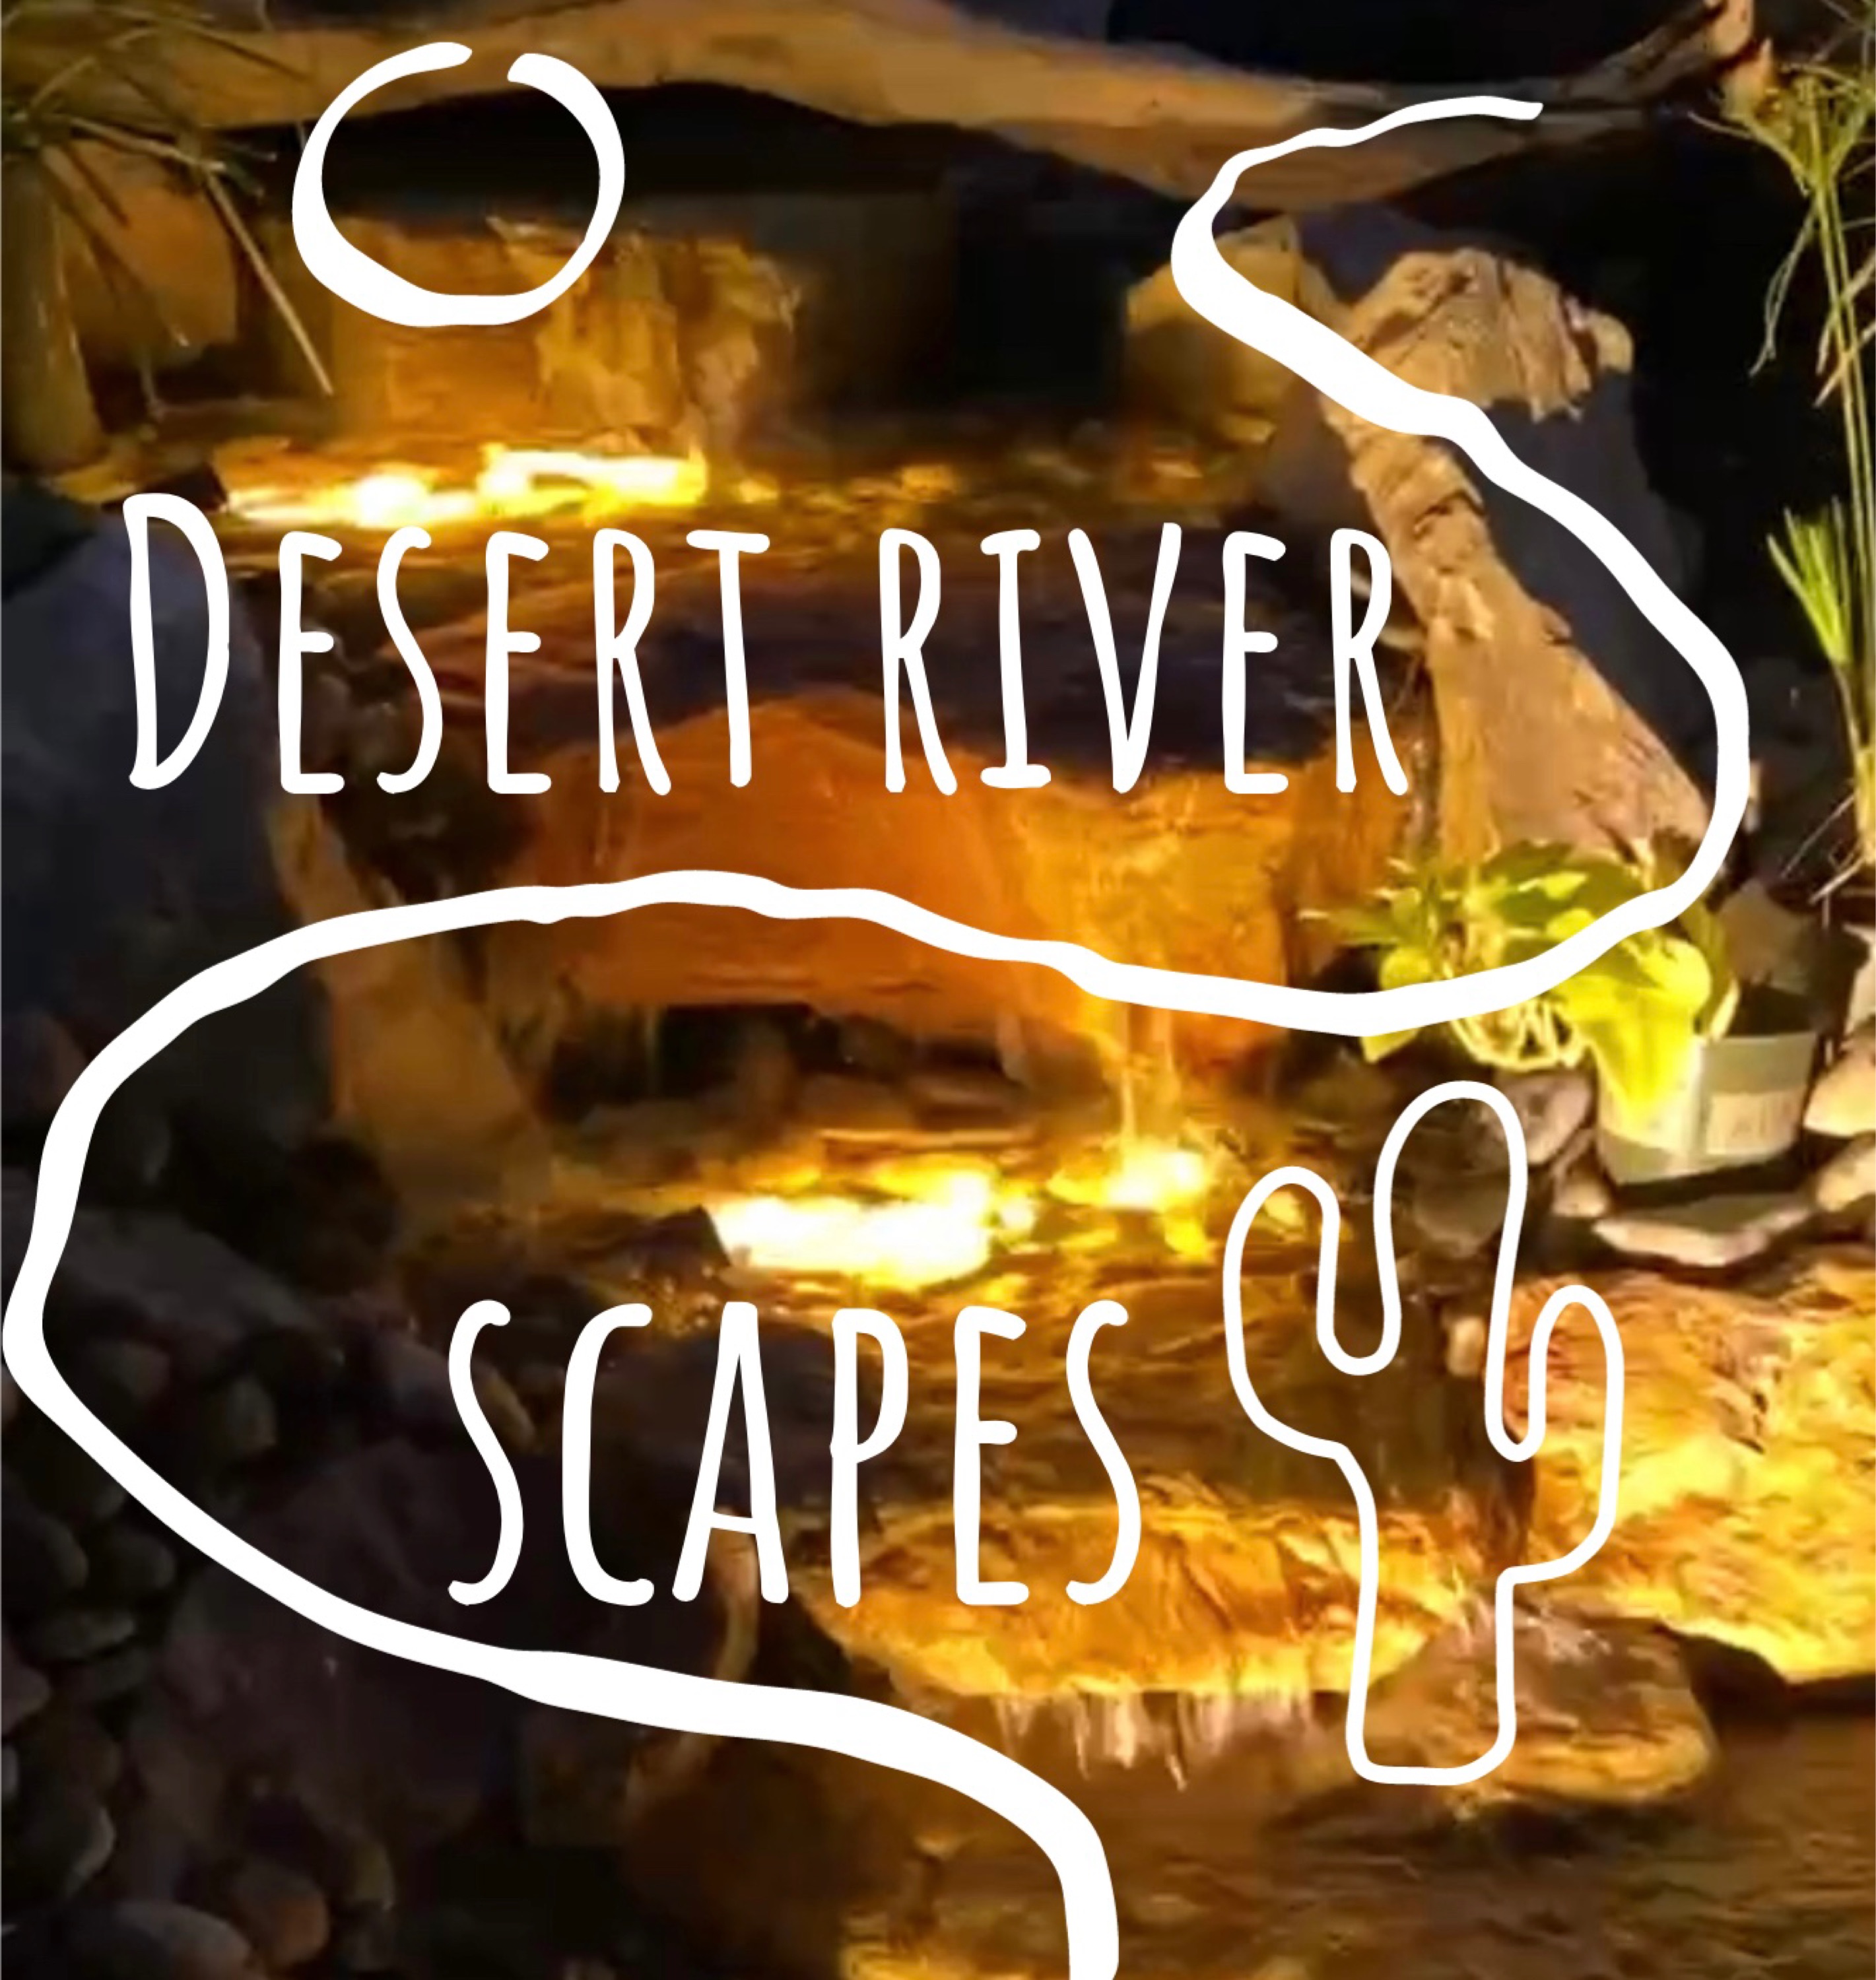 Desert River Scapes Logo